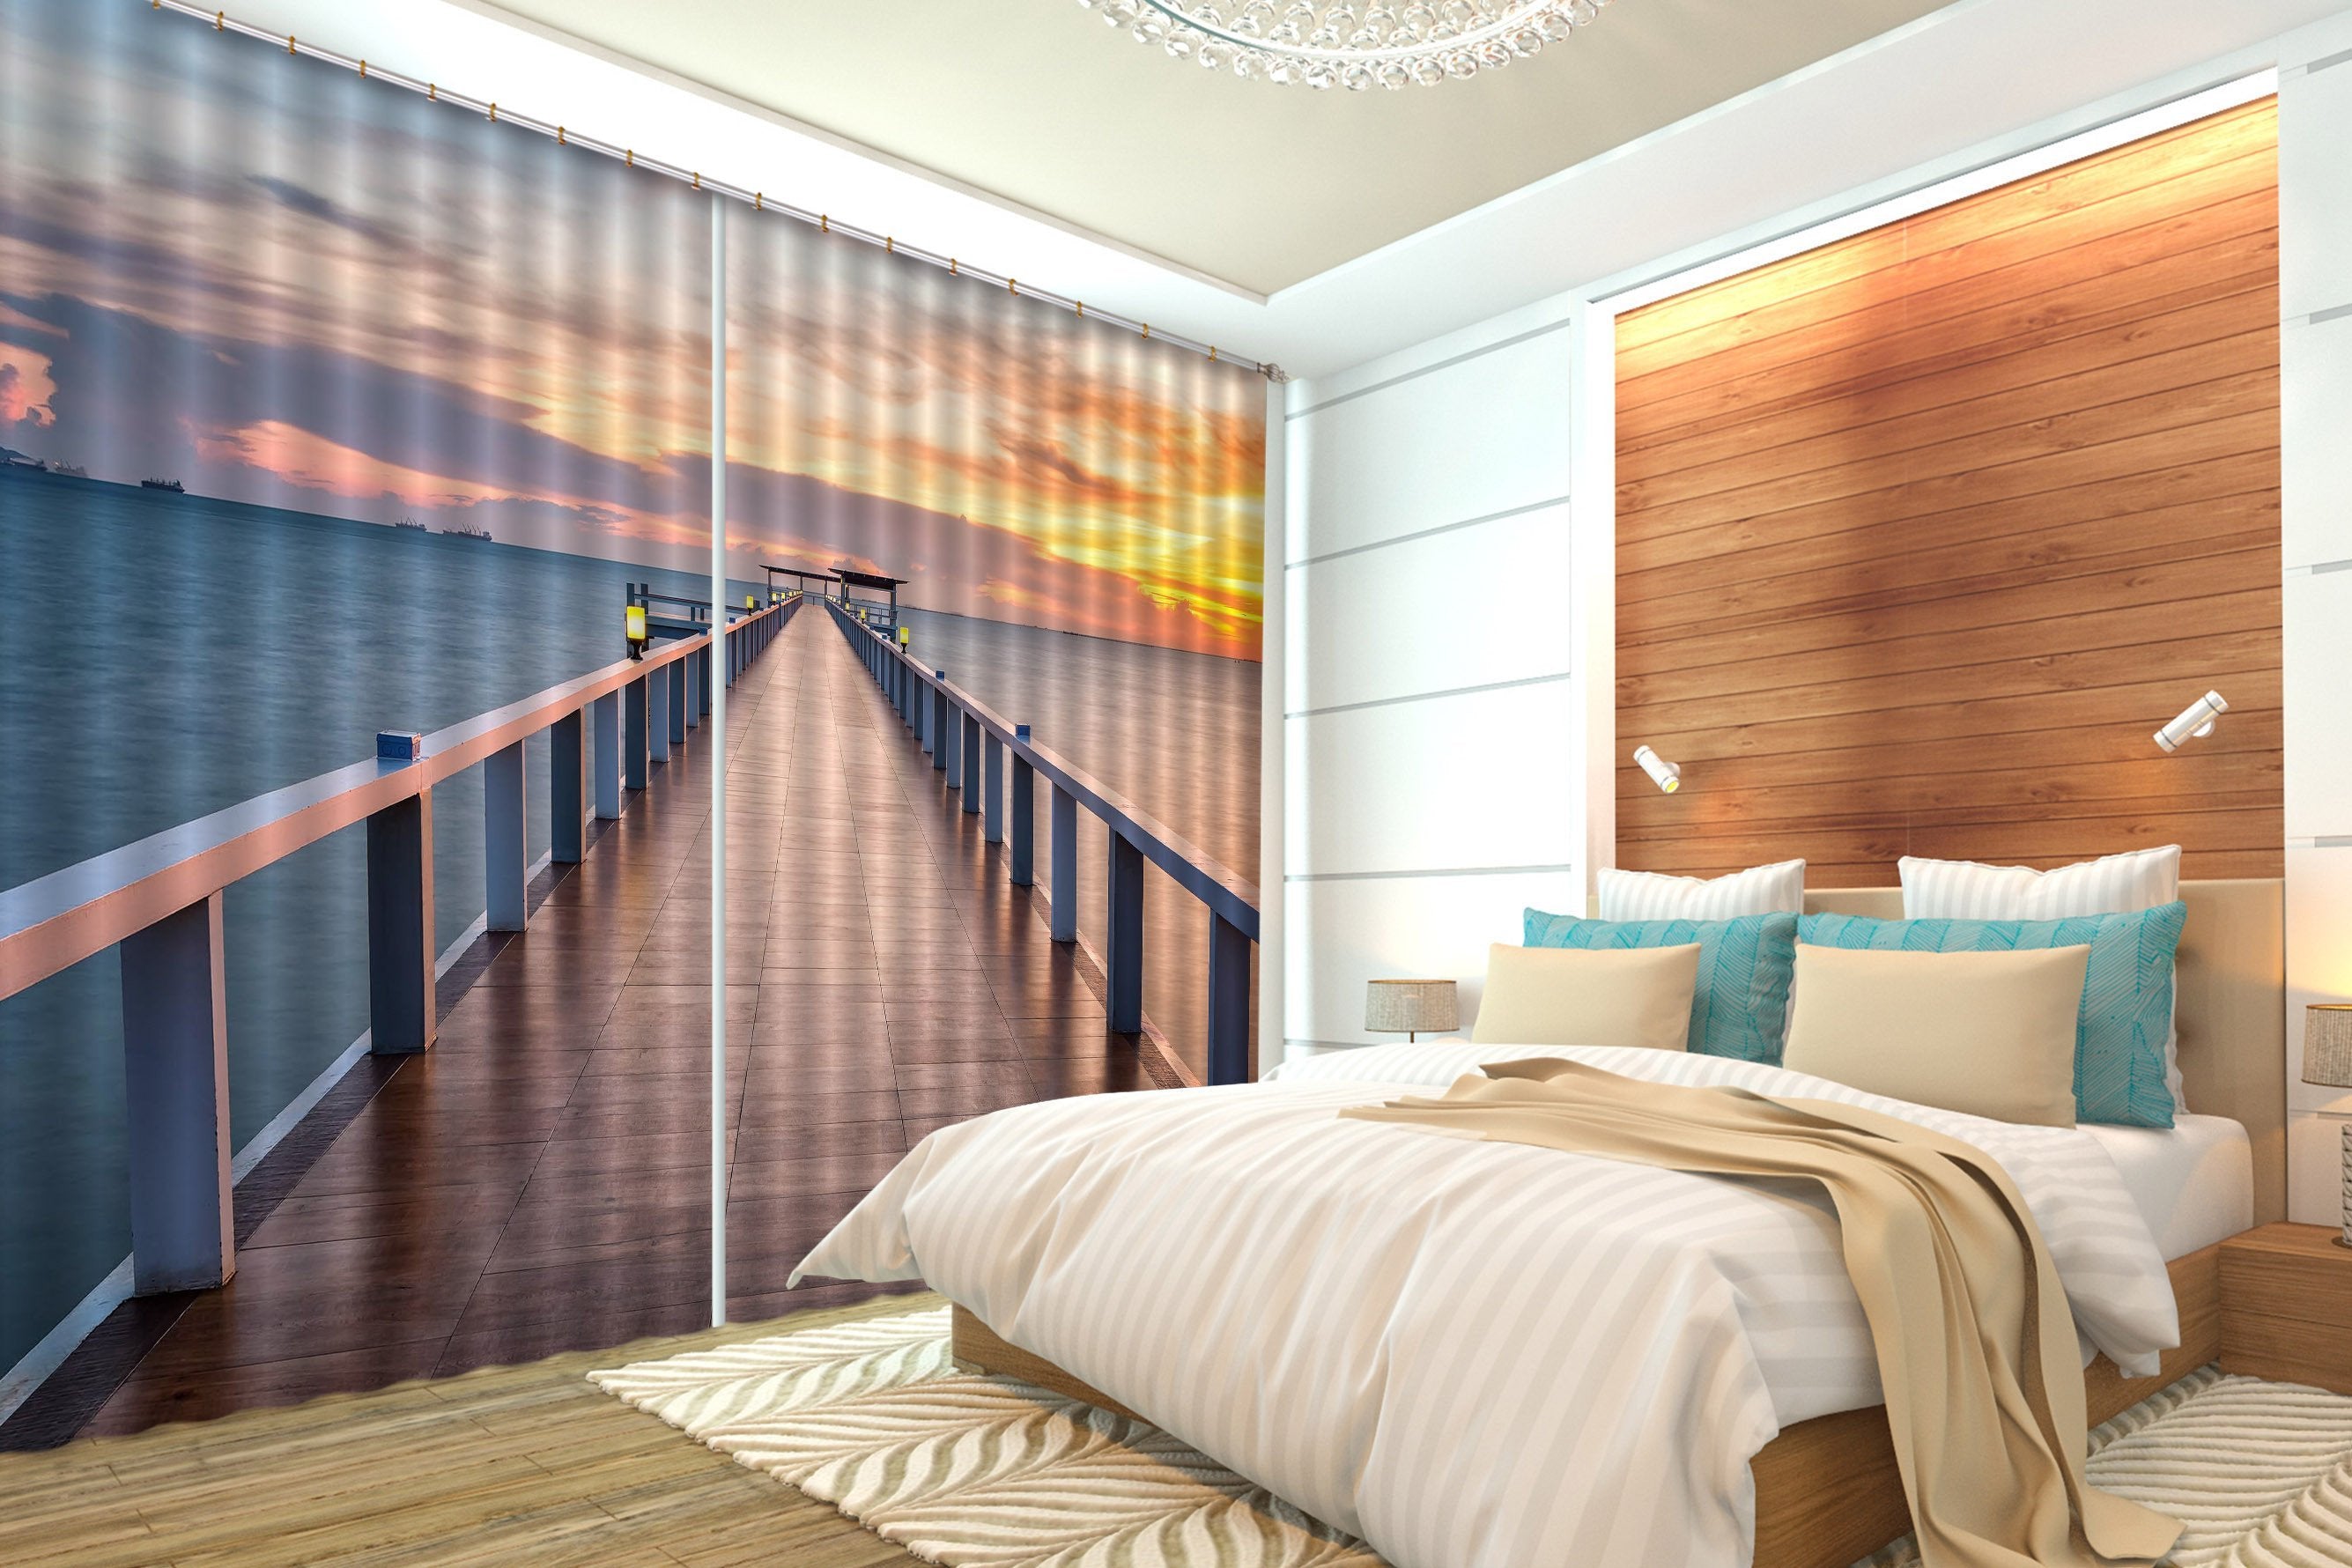 3D Sea Corridor Sunset 546 Curtains Drapes Wallpaper AJ Wallpaper 